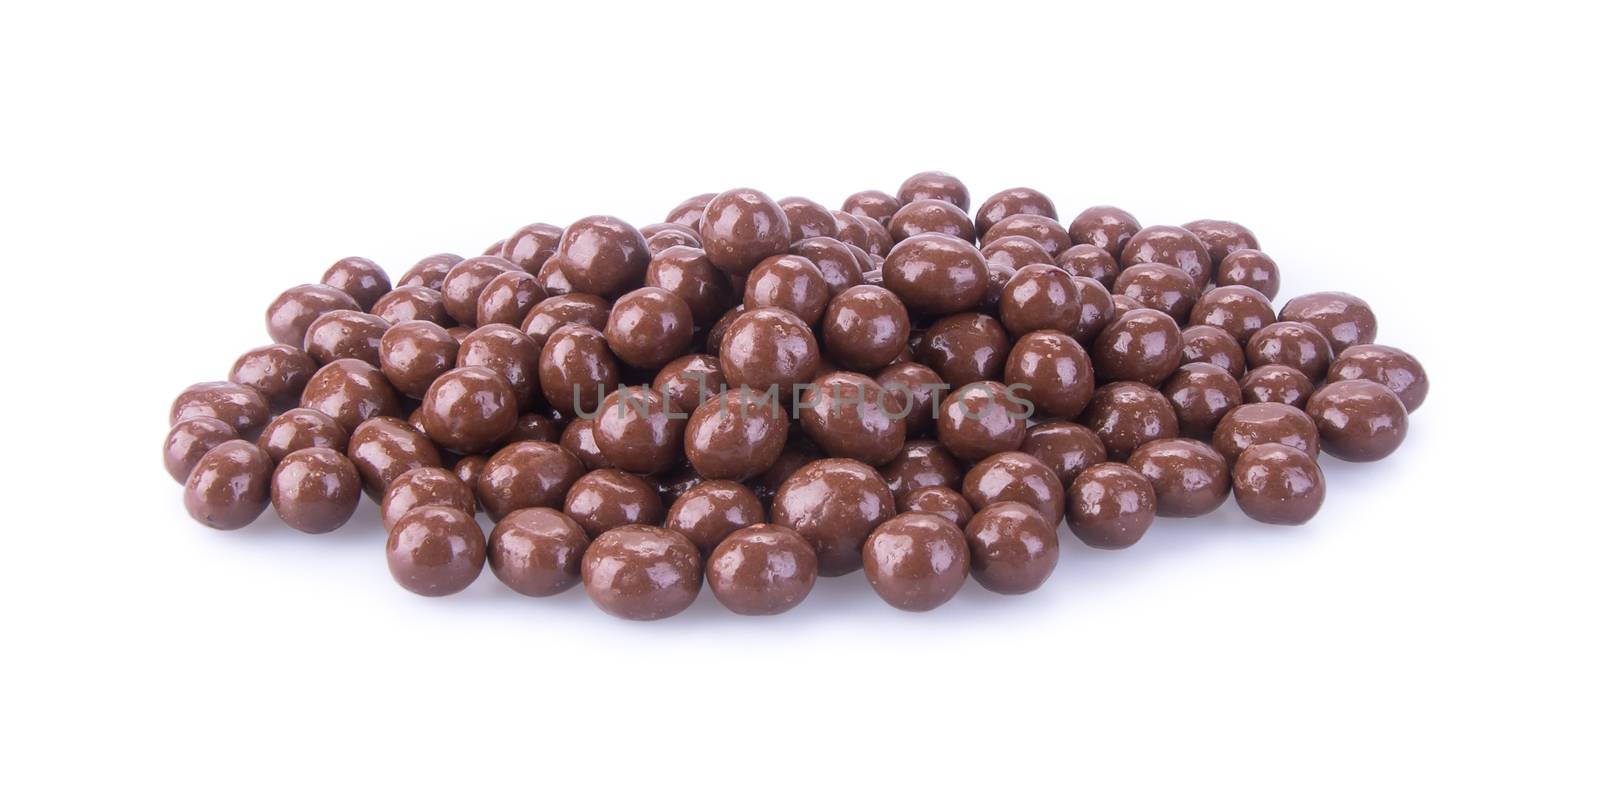 chocolate balls. chocolate balls on a background by heinteh